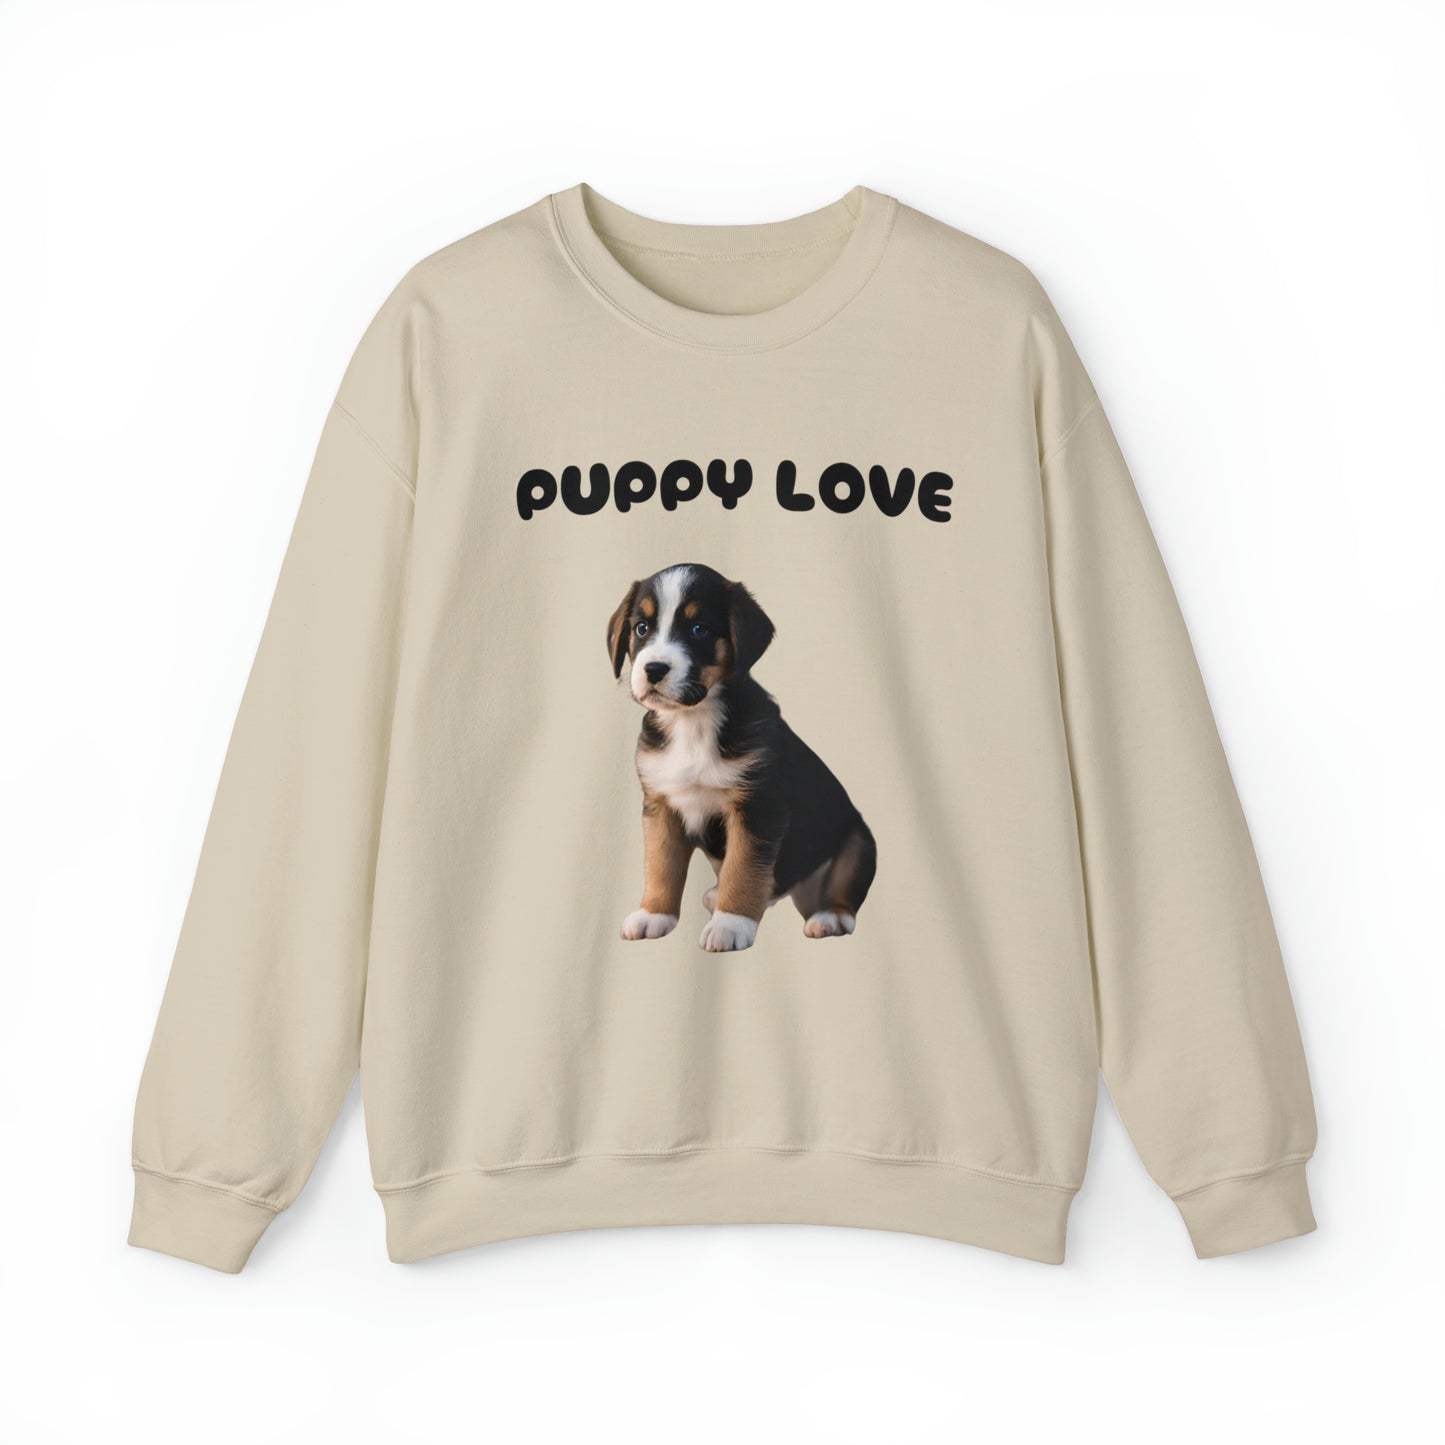 Puppy Love Sweatshirt For Dog Lovers